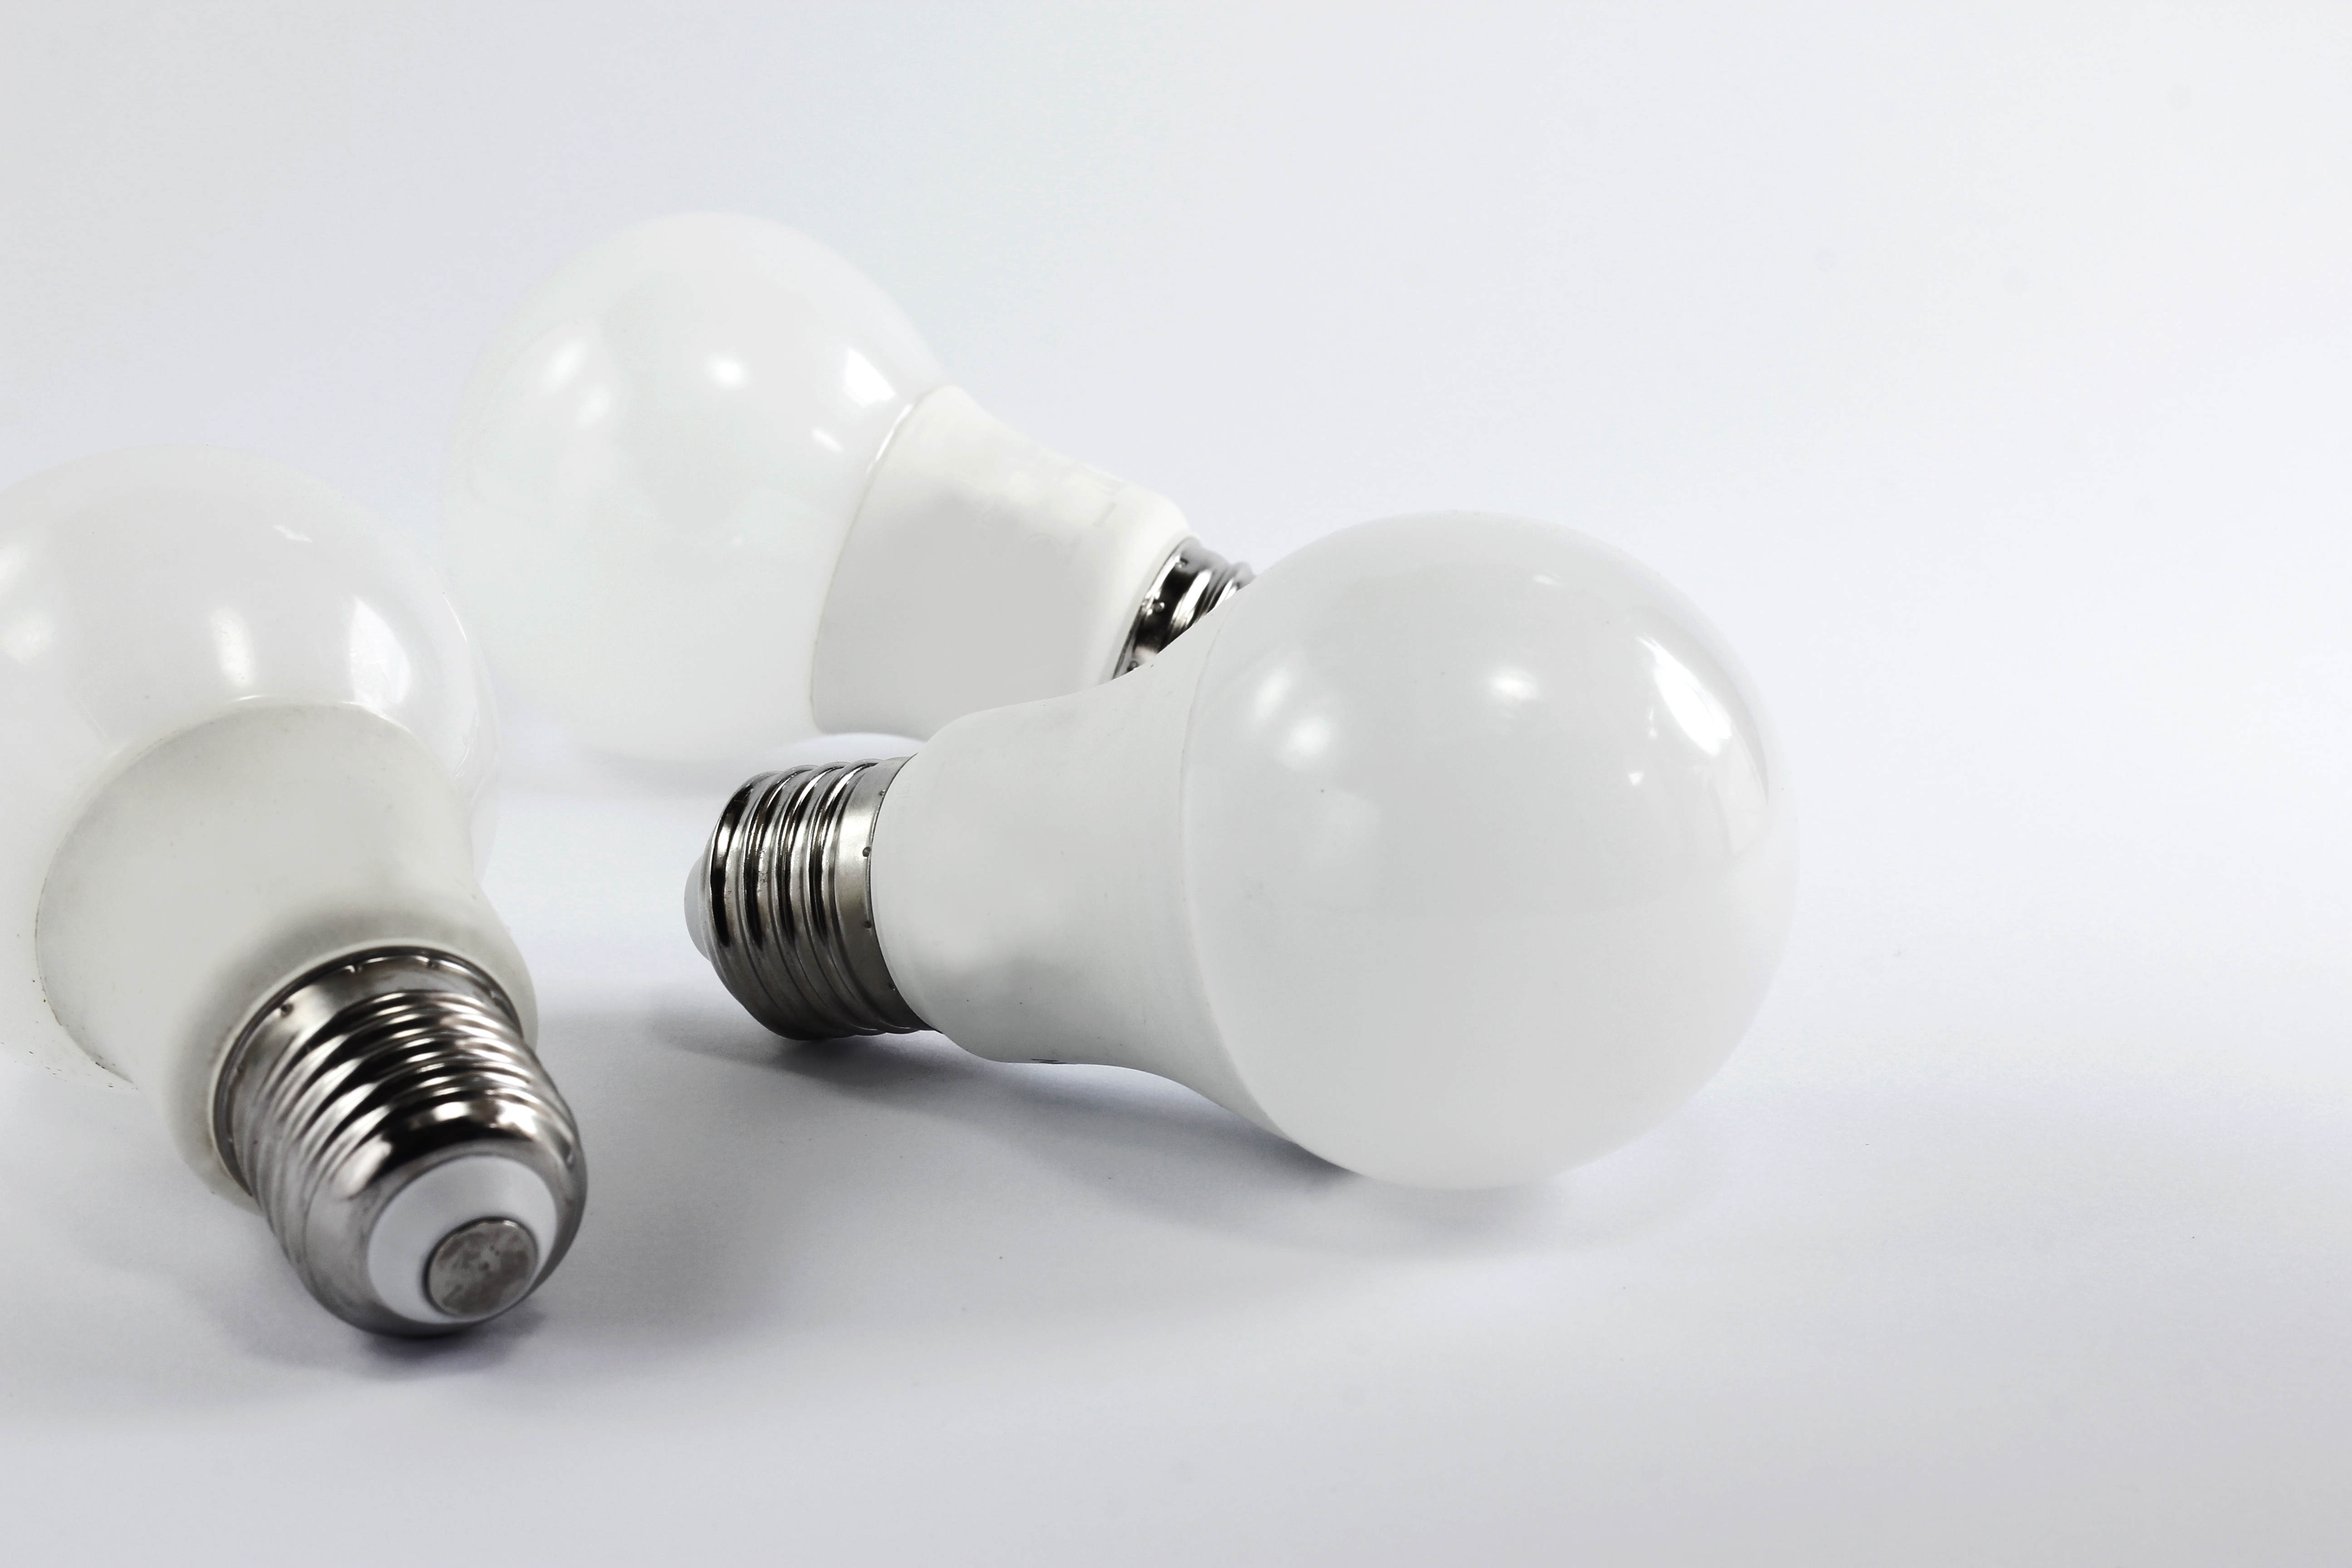 Led,Light,Bulb,Or,Lamp,Isolated,On,White,Background